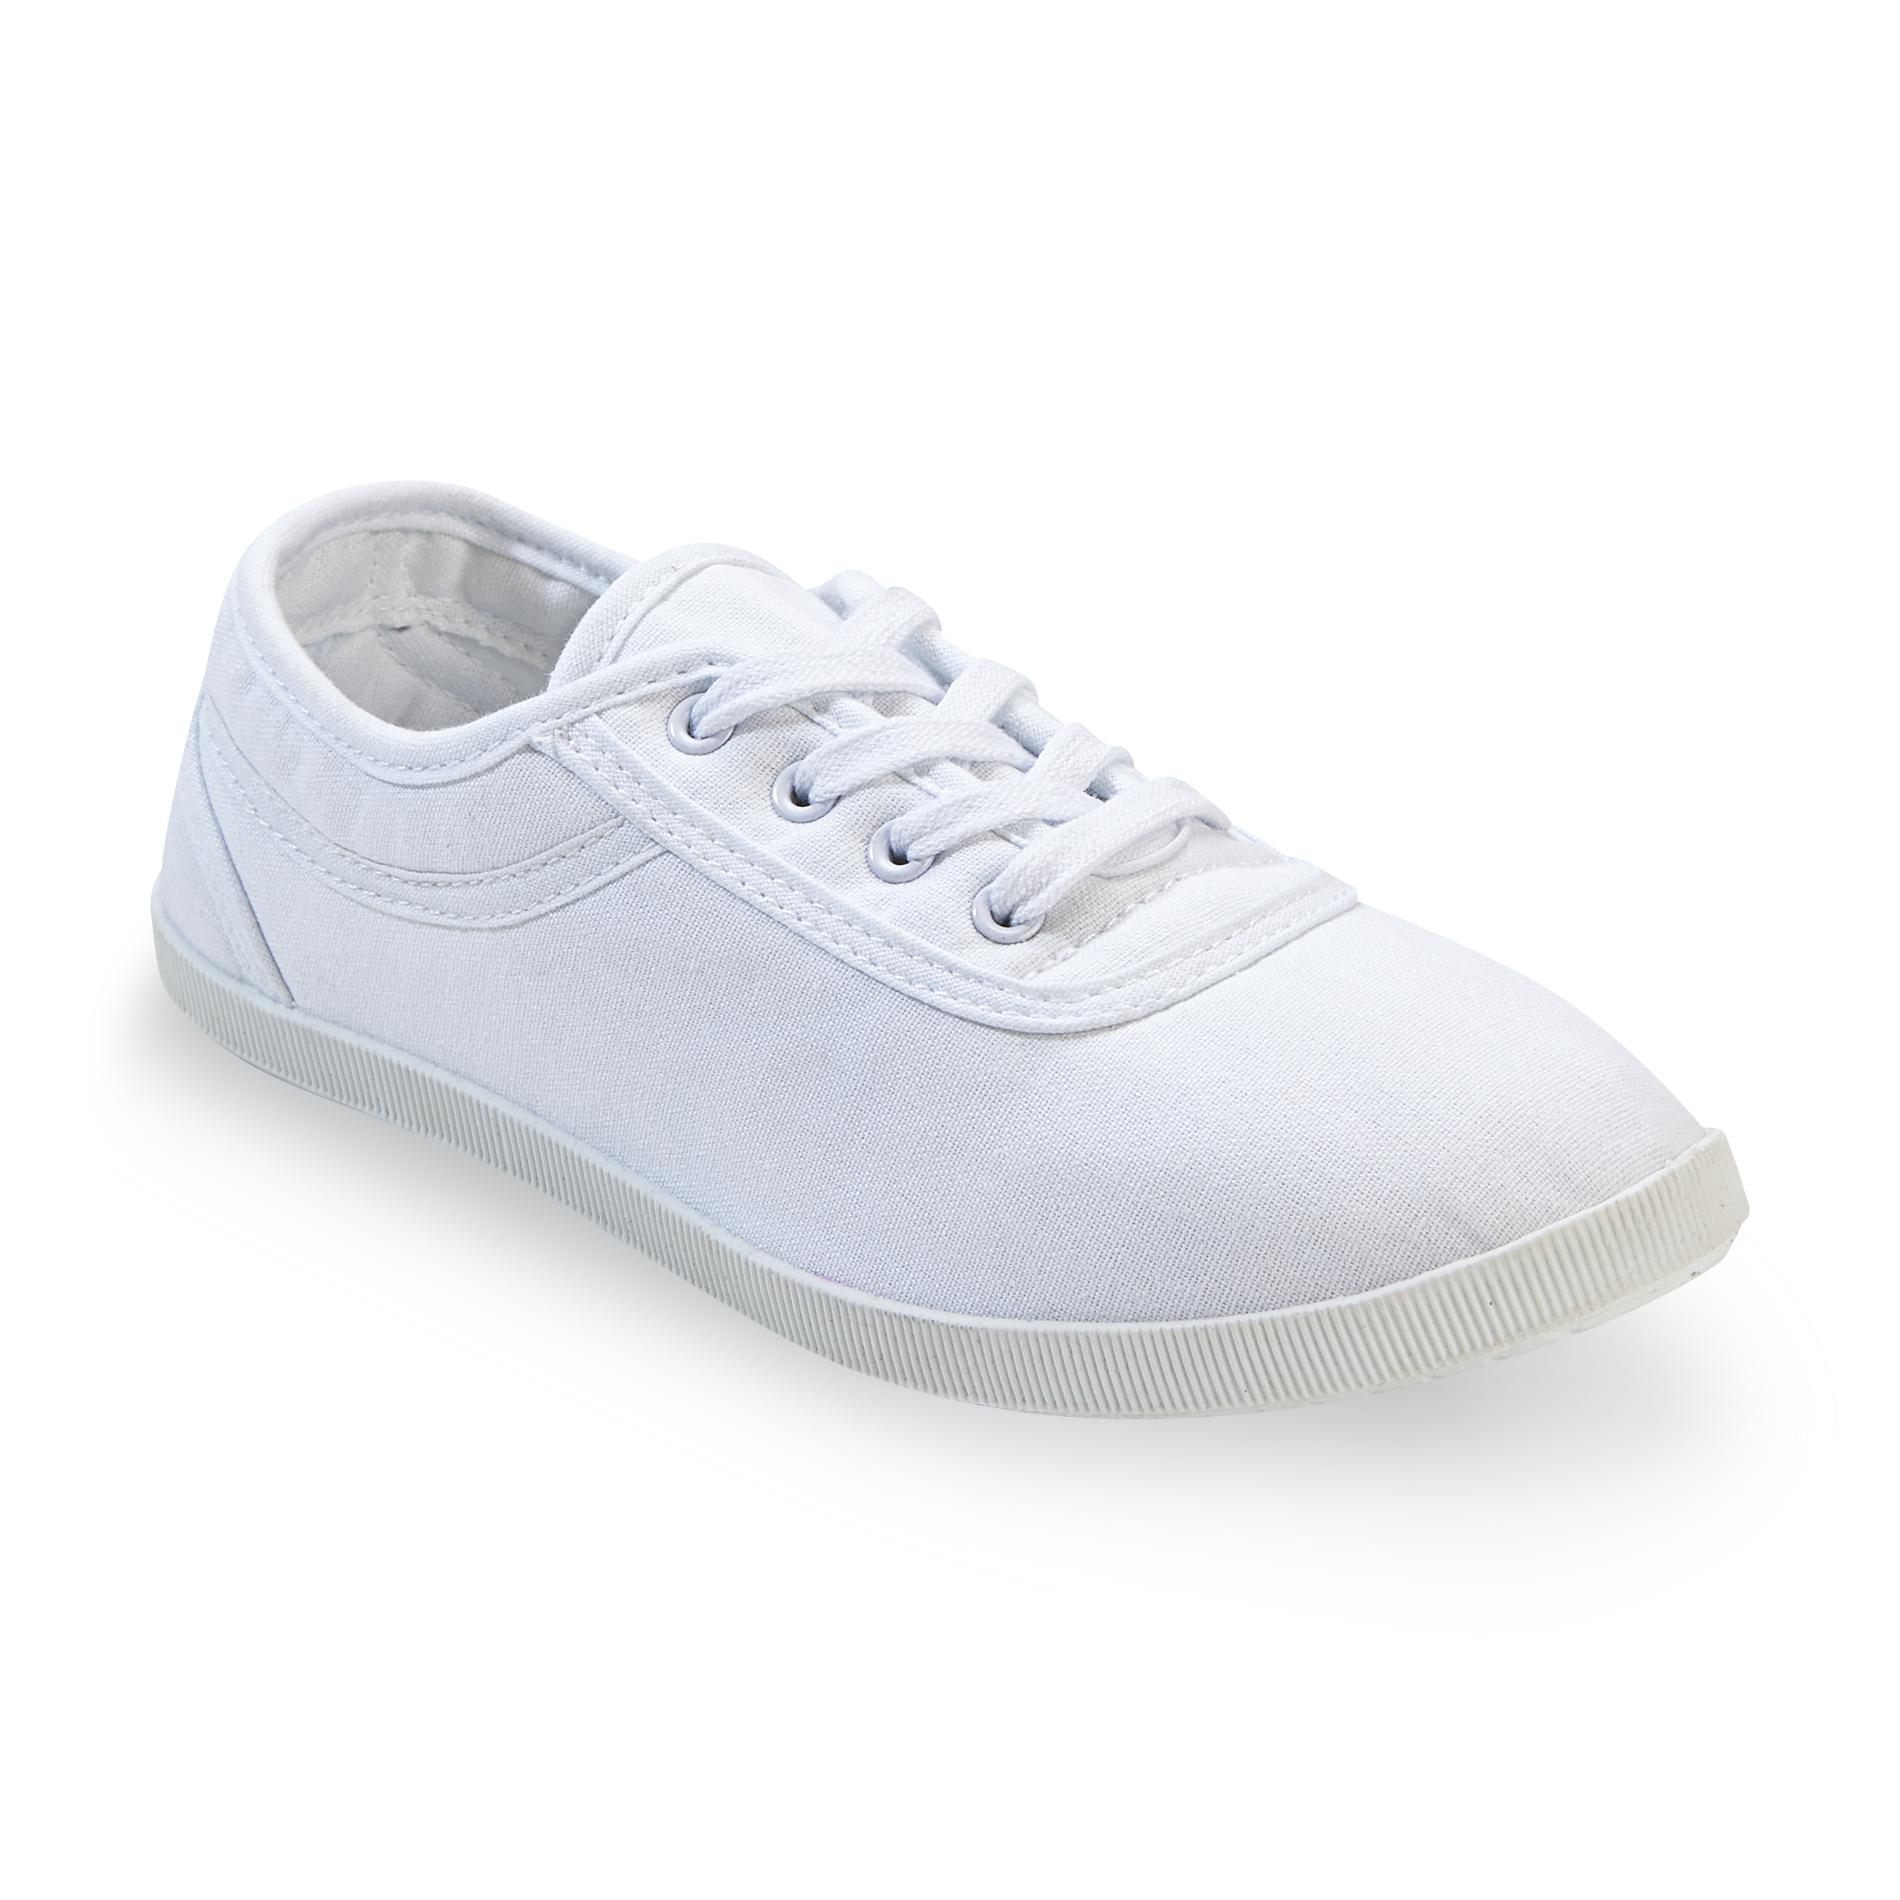 Basic Editions Women's Eavan White Casual Shoe